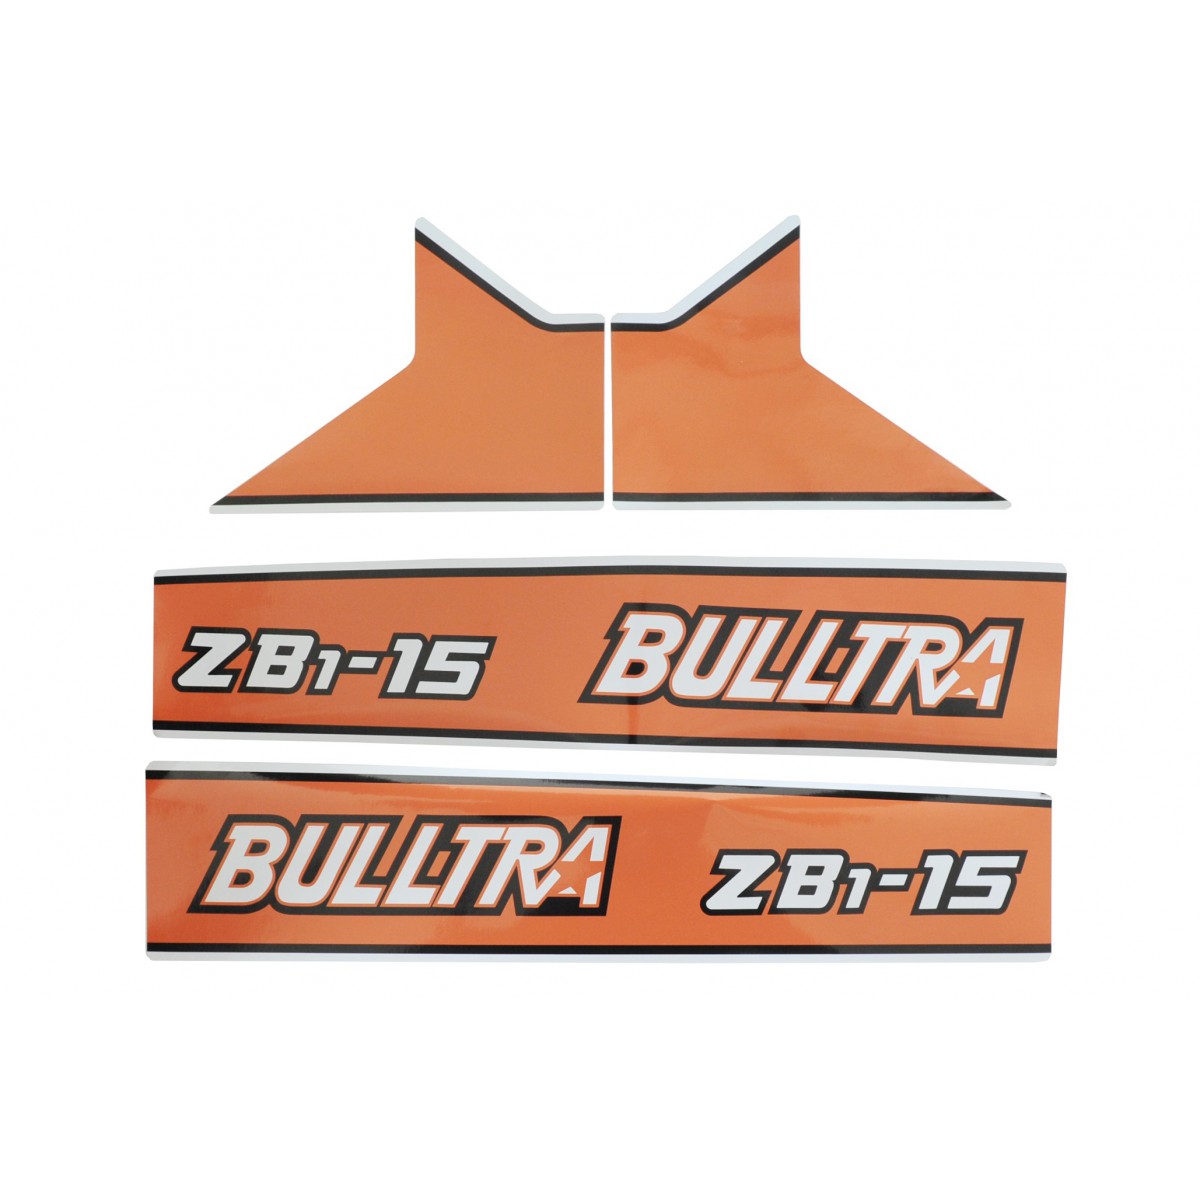 Naklejki Kubota Bulltra B1-15, ZB1-15